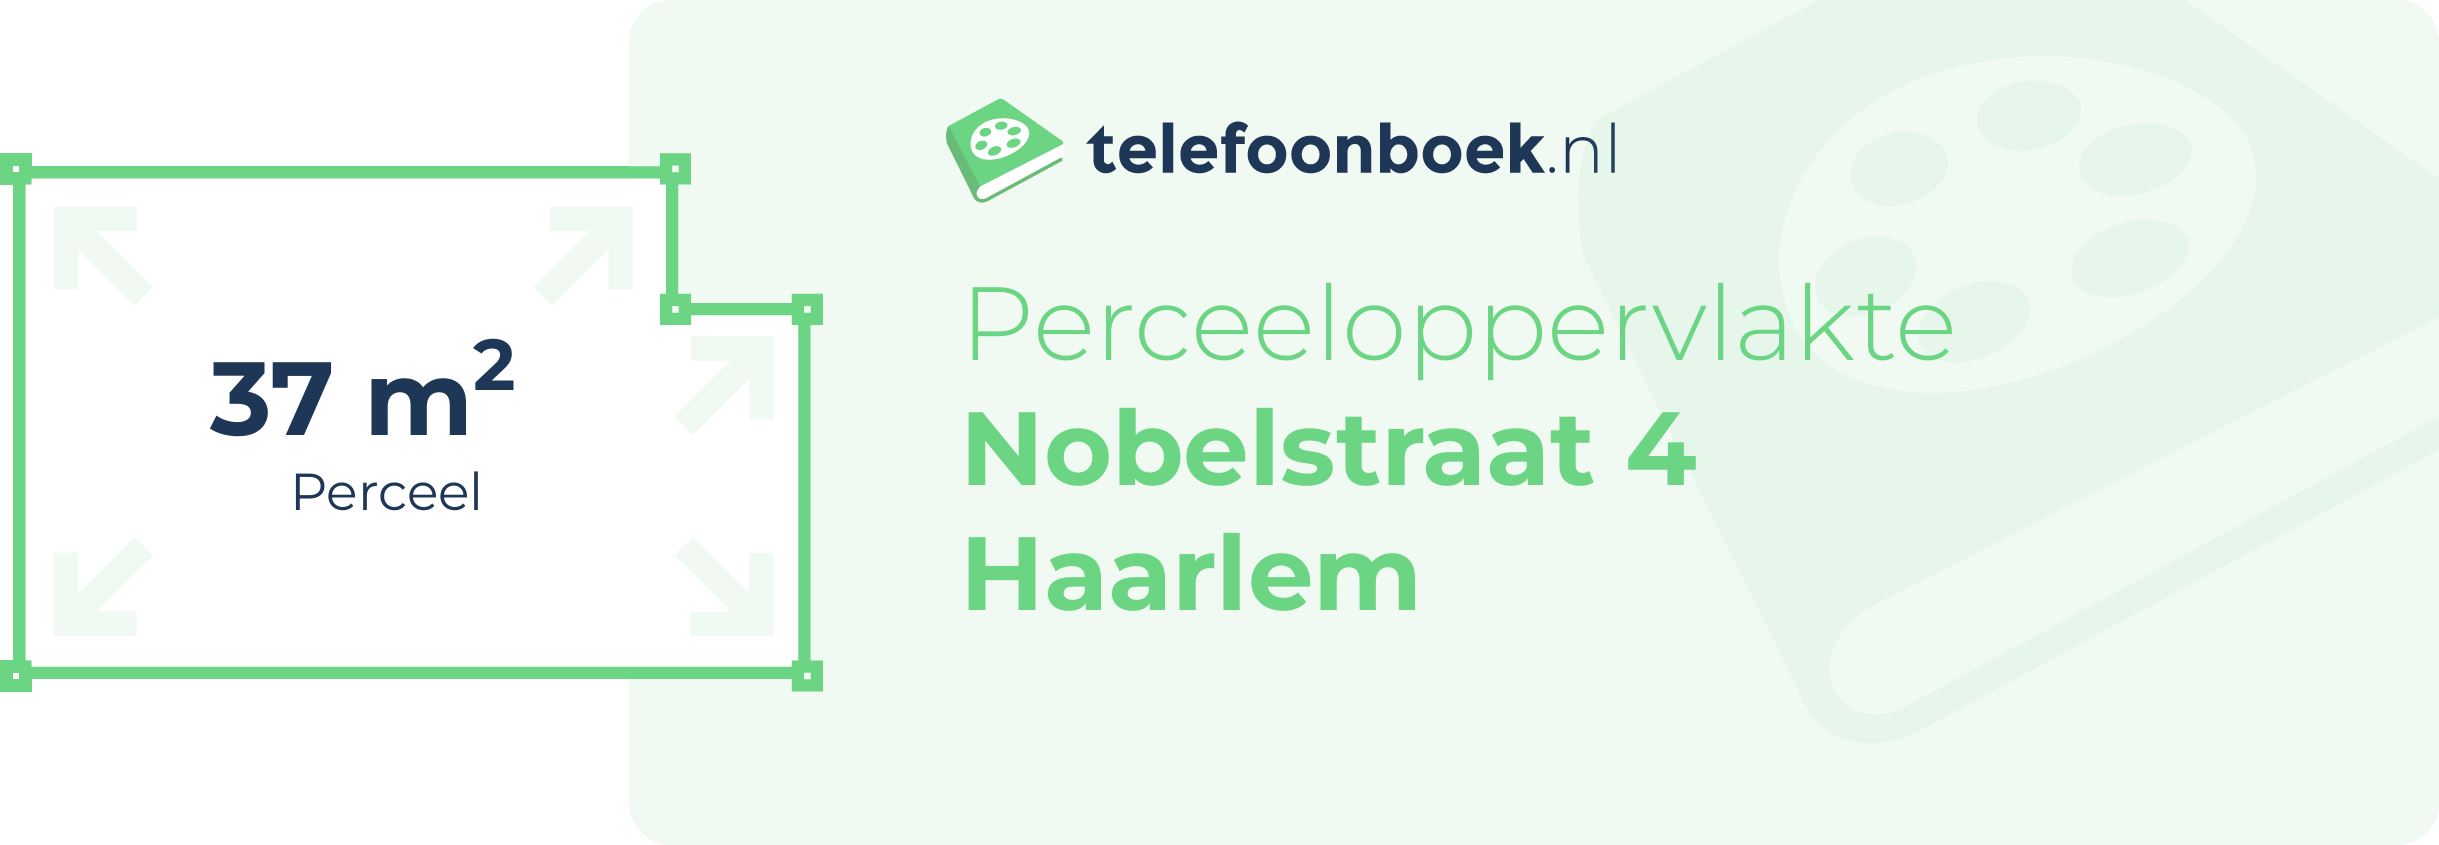 Perceeloppervlakte Nobelstraat 4 Haarlem